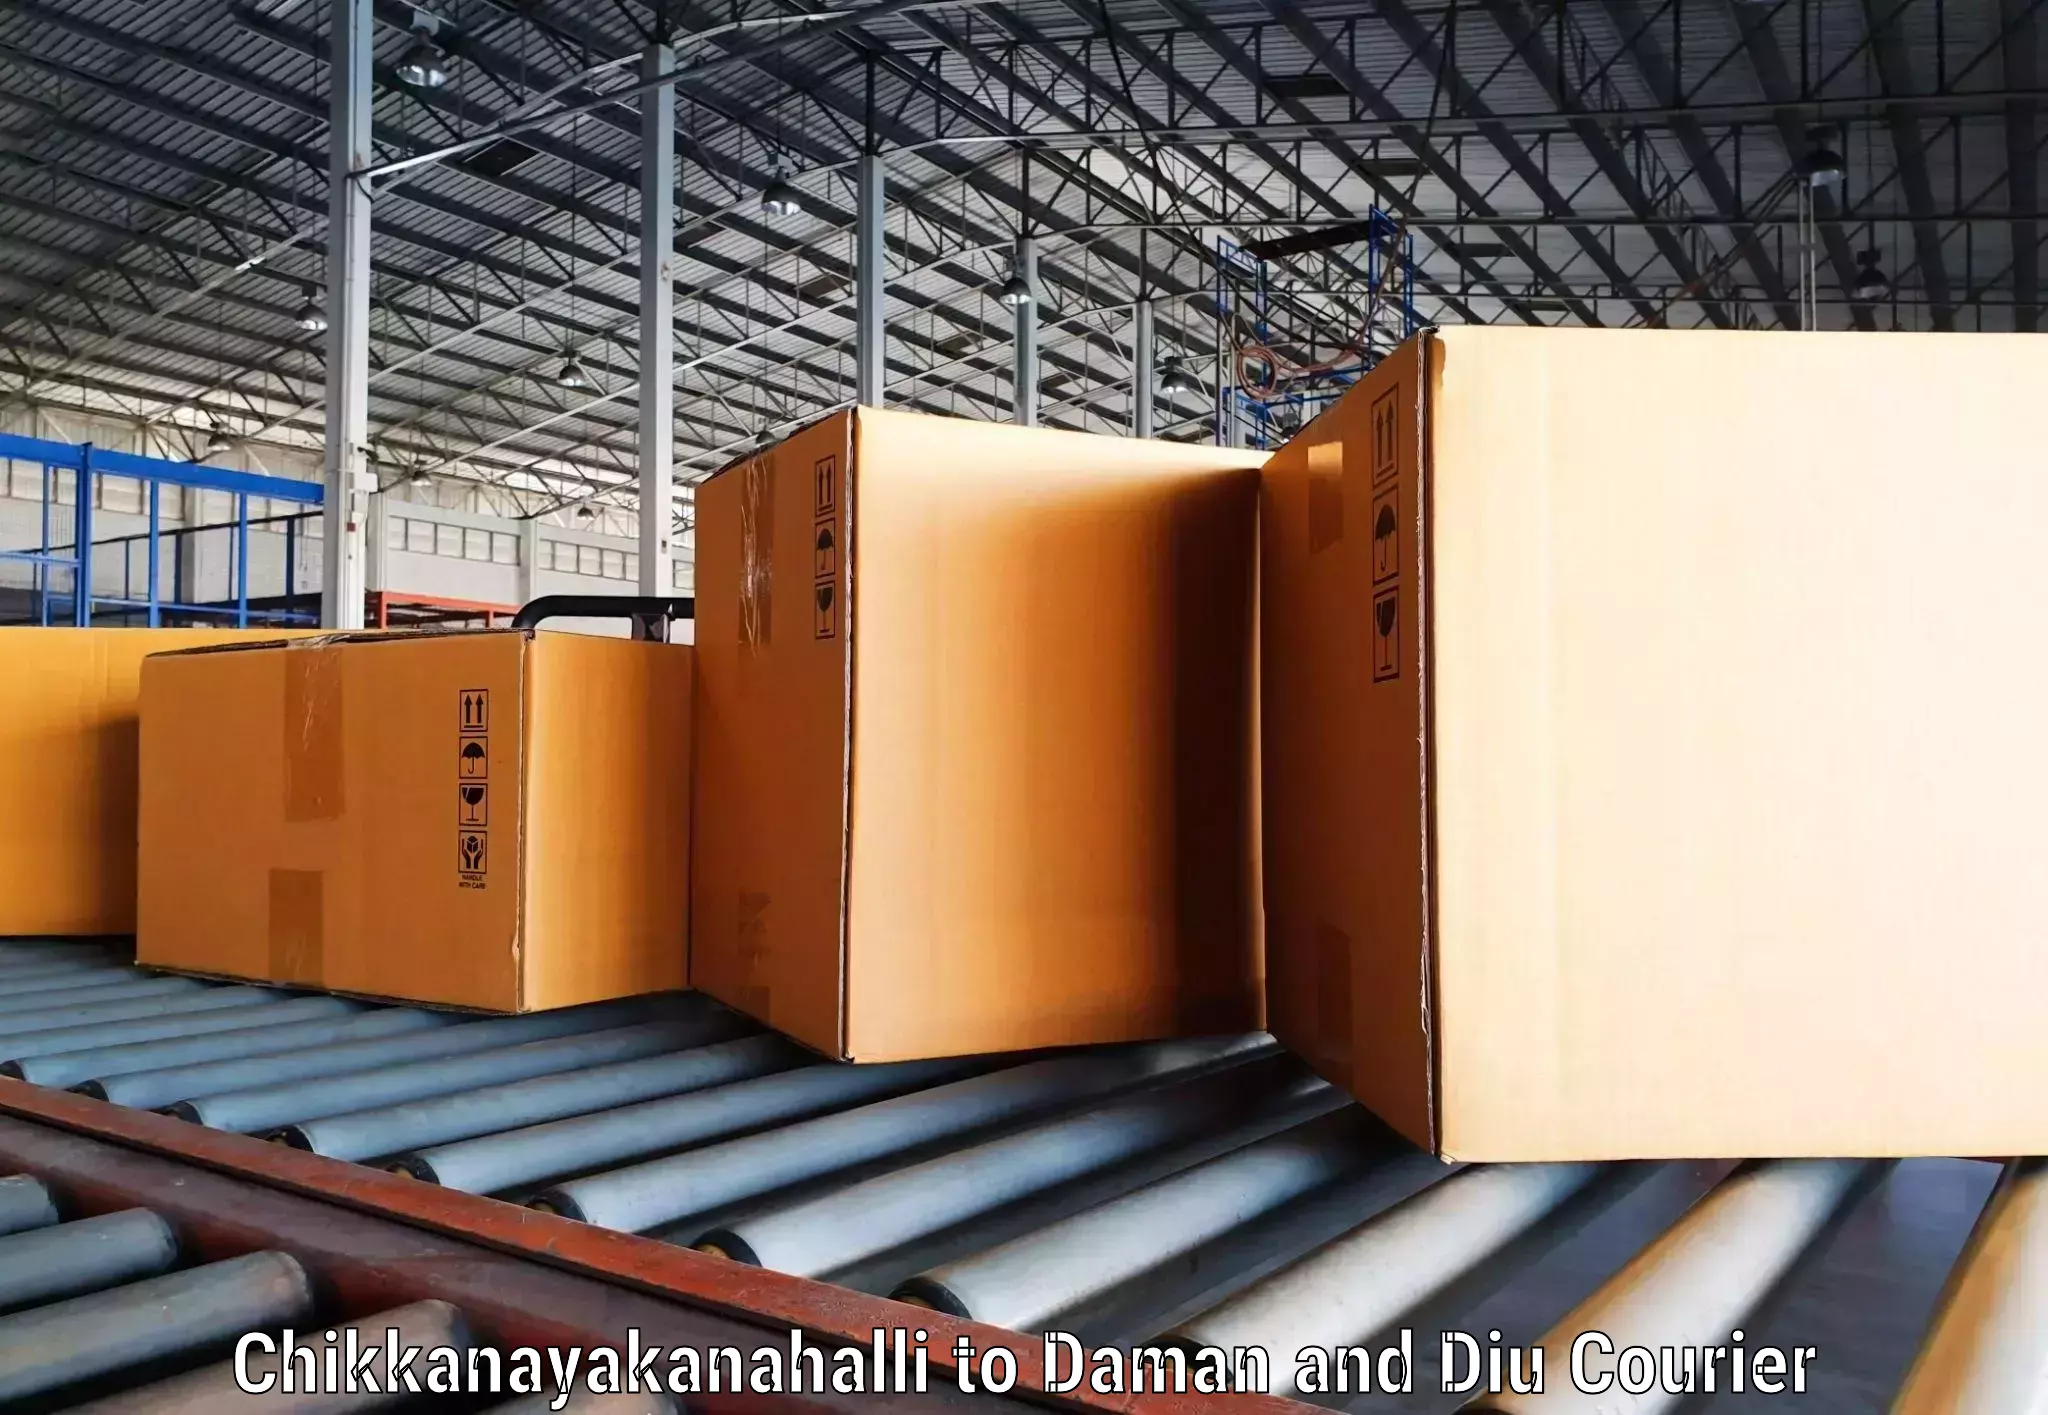 Advanced shipping technology Chikkanayakanahalli to Diu